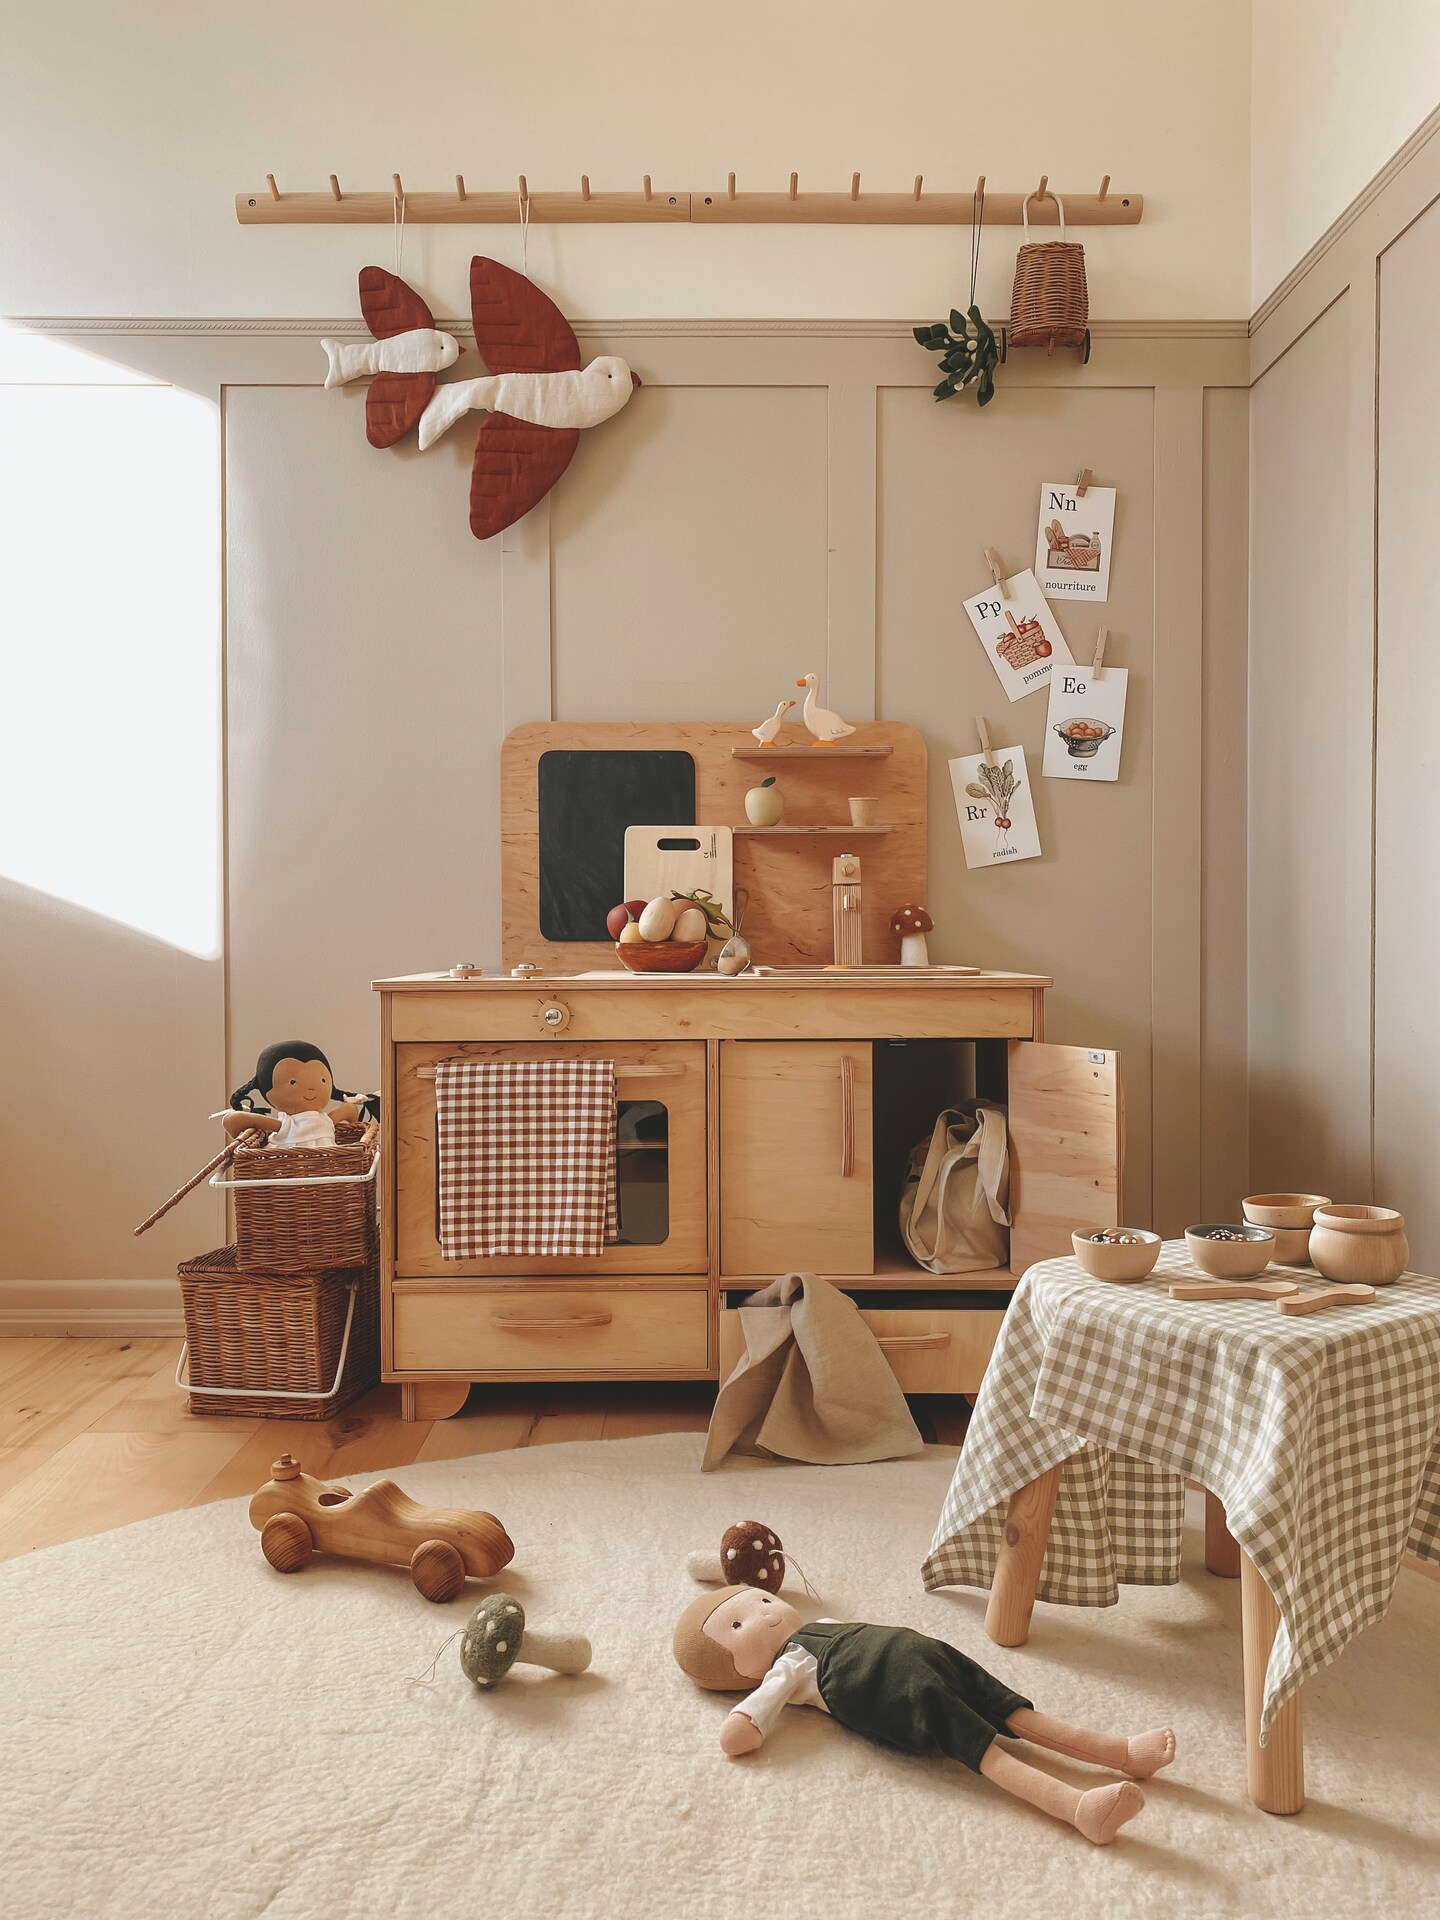 Pretend Play Kitchen, Playroom Furniture for Children, Christmas Baby Gift, Wood Kitchen Play Montessori